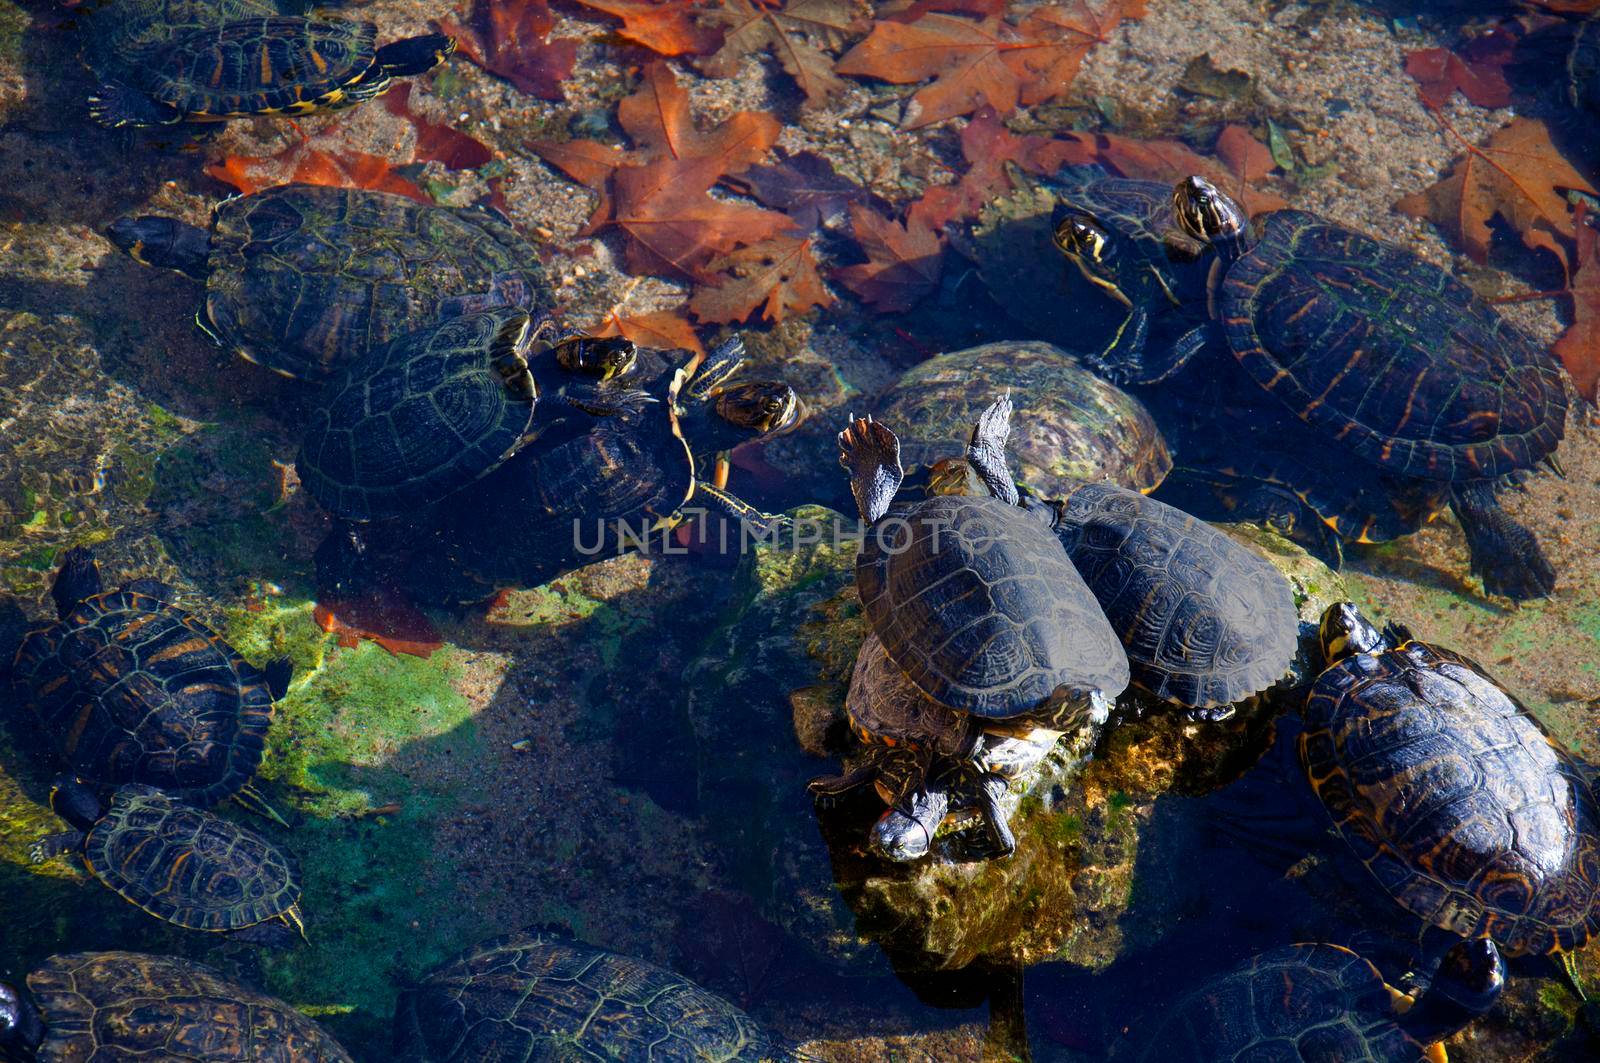 Black turtles having sun in the small pond, autumn